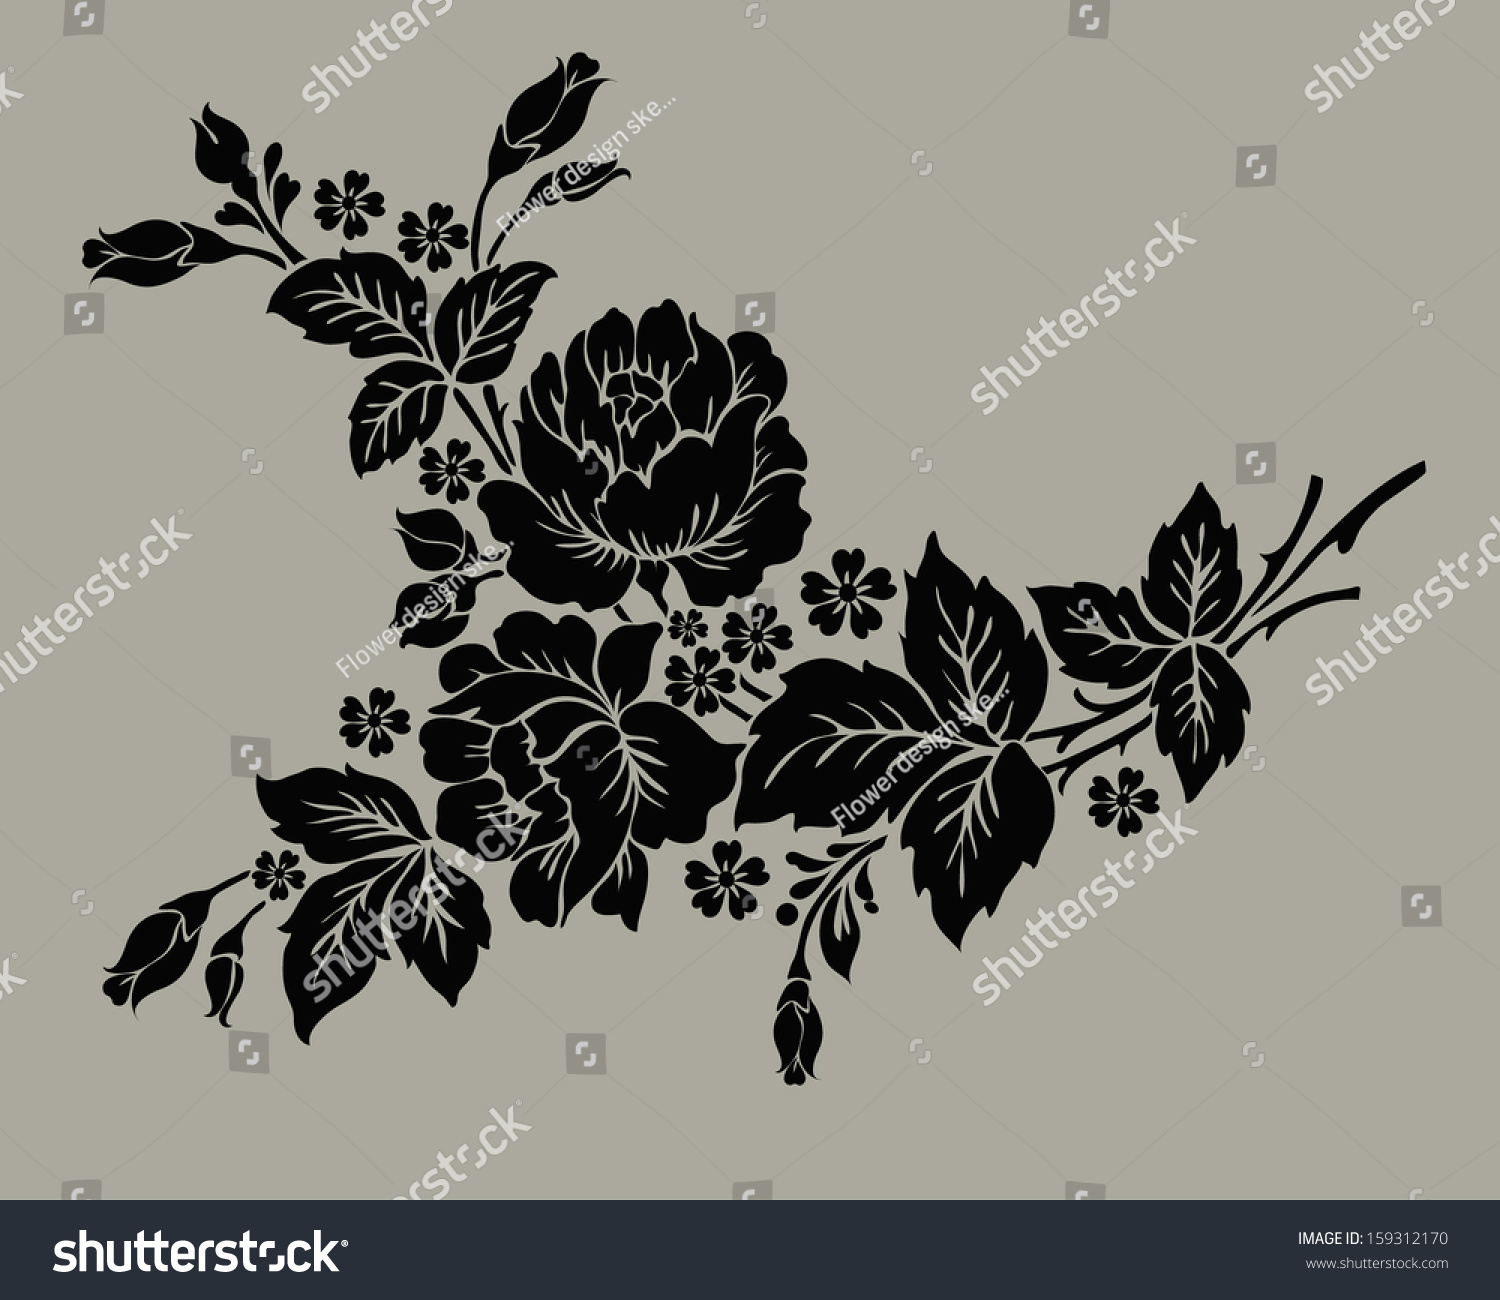 Rose Motif,Flower Design Elements Vector - 159312170 : Shutterstock